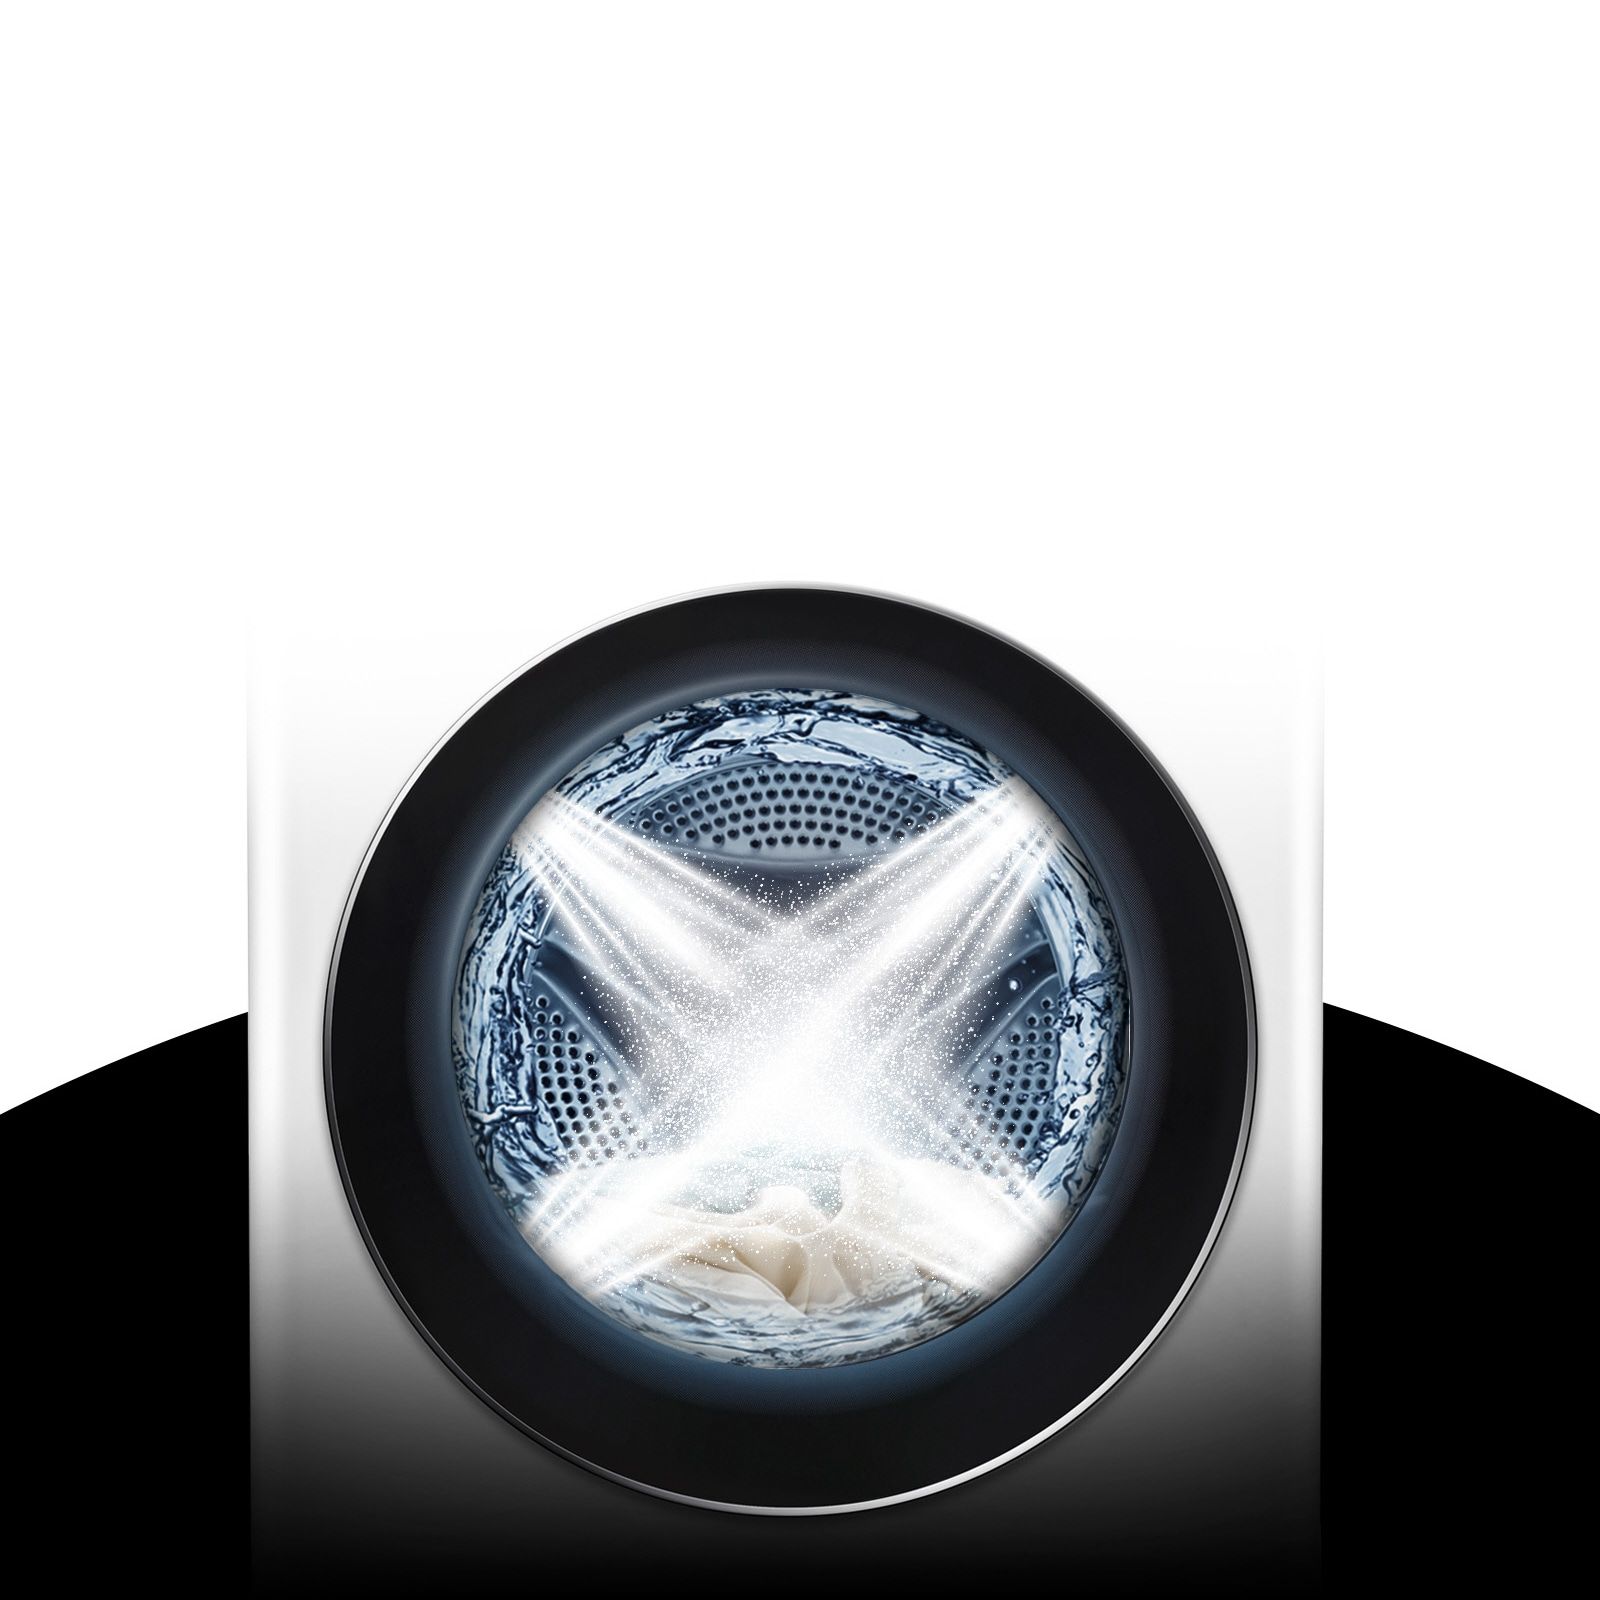 LG TurboWash 360°: غسيل سريع وفعال لأنماط الحياة المزدحمة